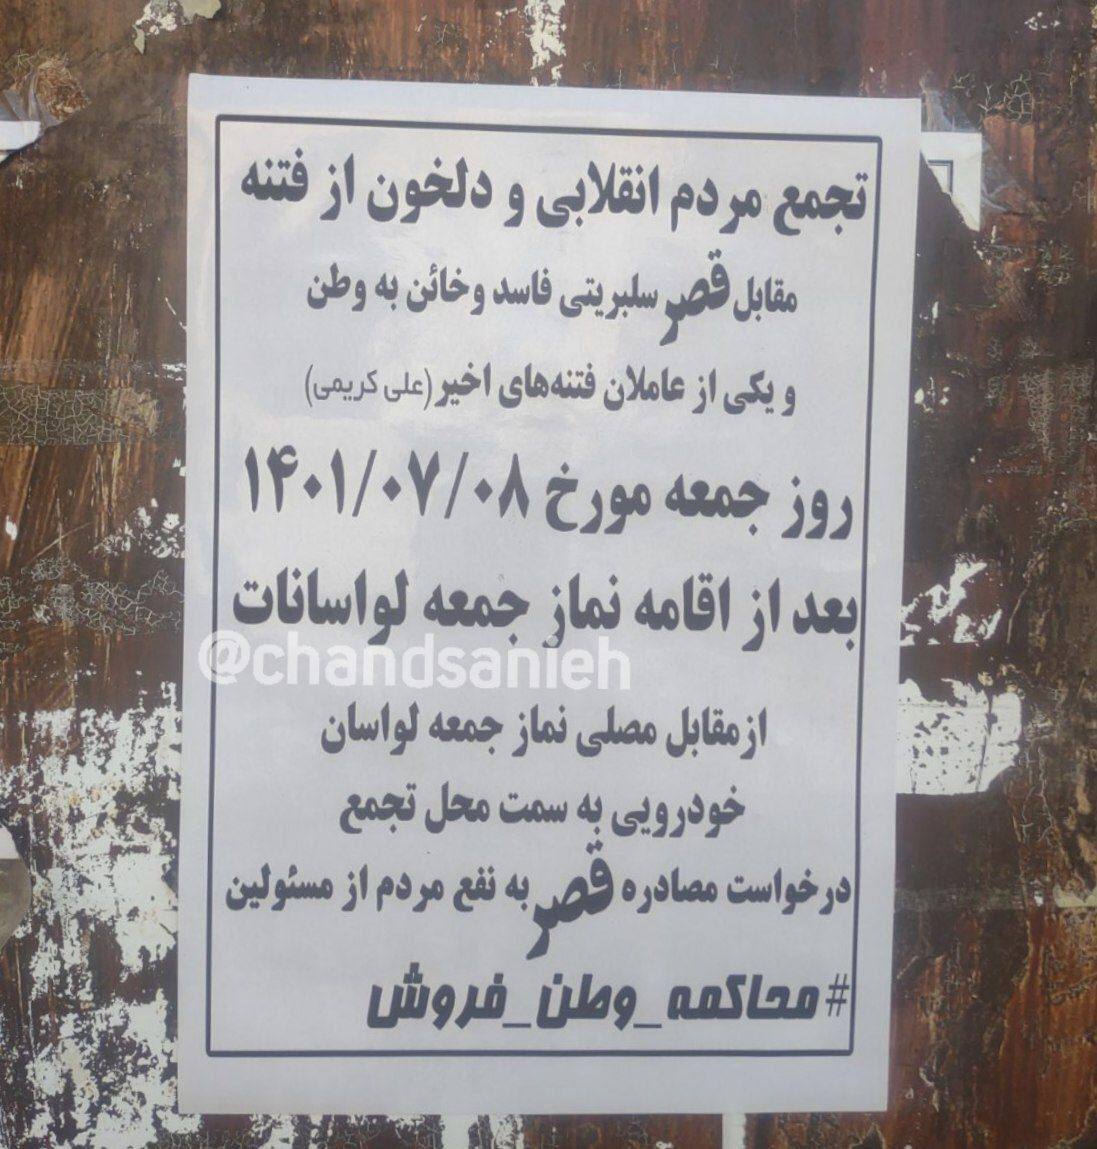 دعوت به تجمع مقابل خانه علي كريمي در لواسان (تصوير)